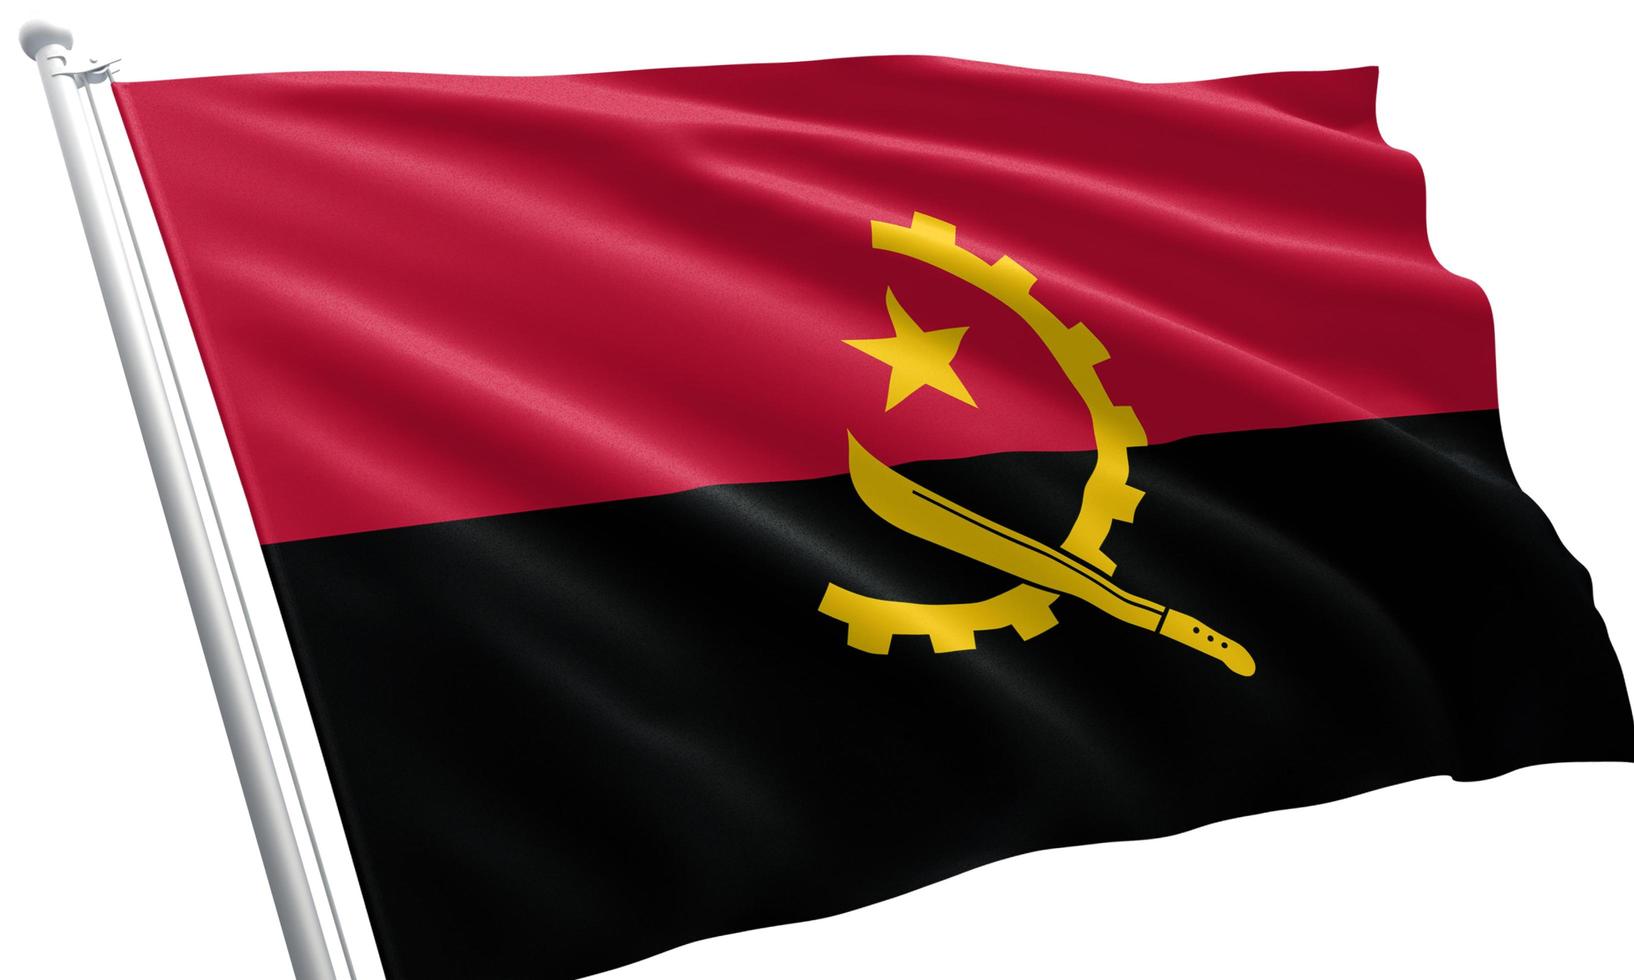 närbild viftar angolas flagga foto